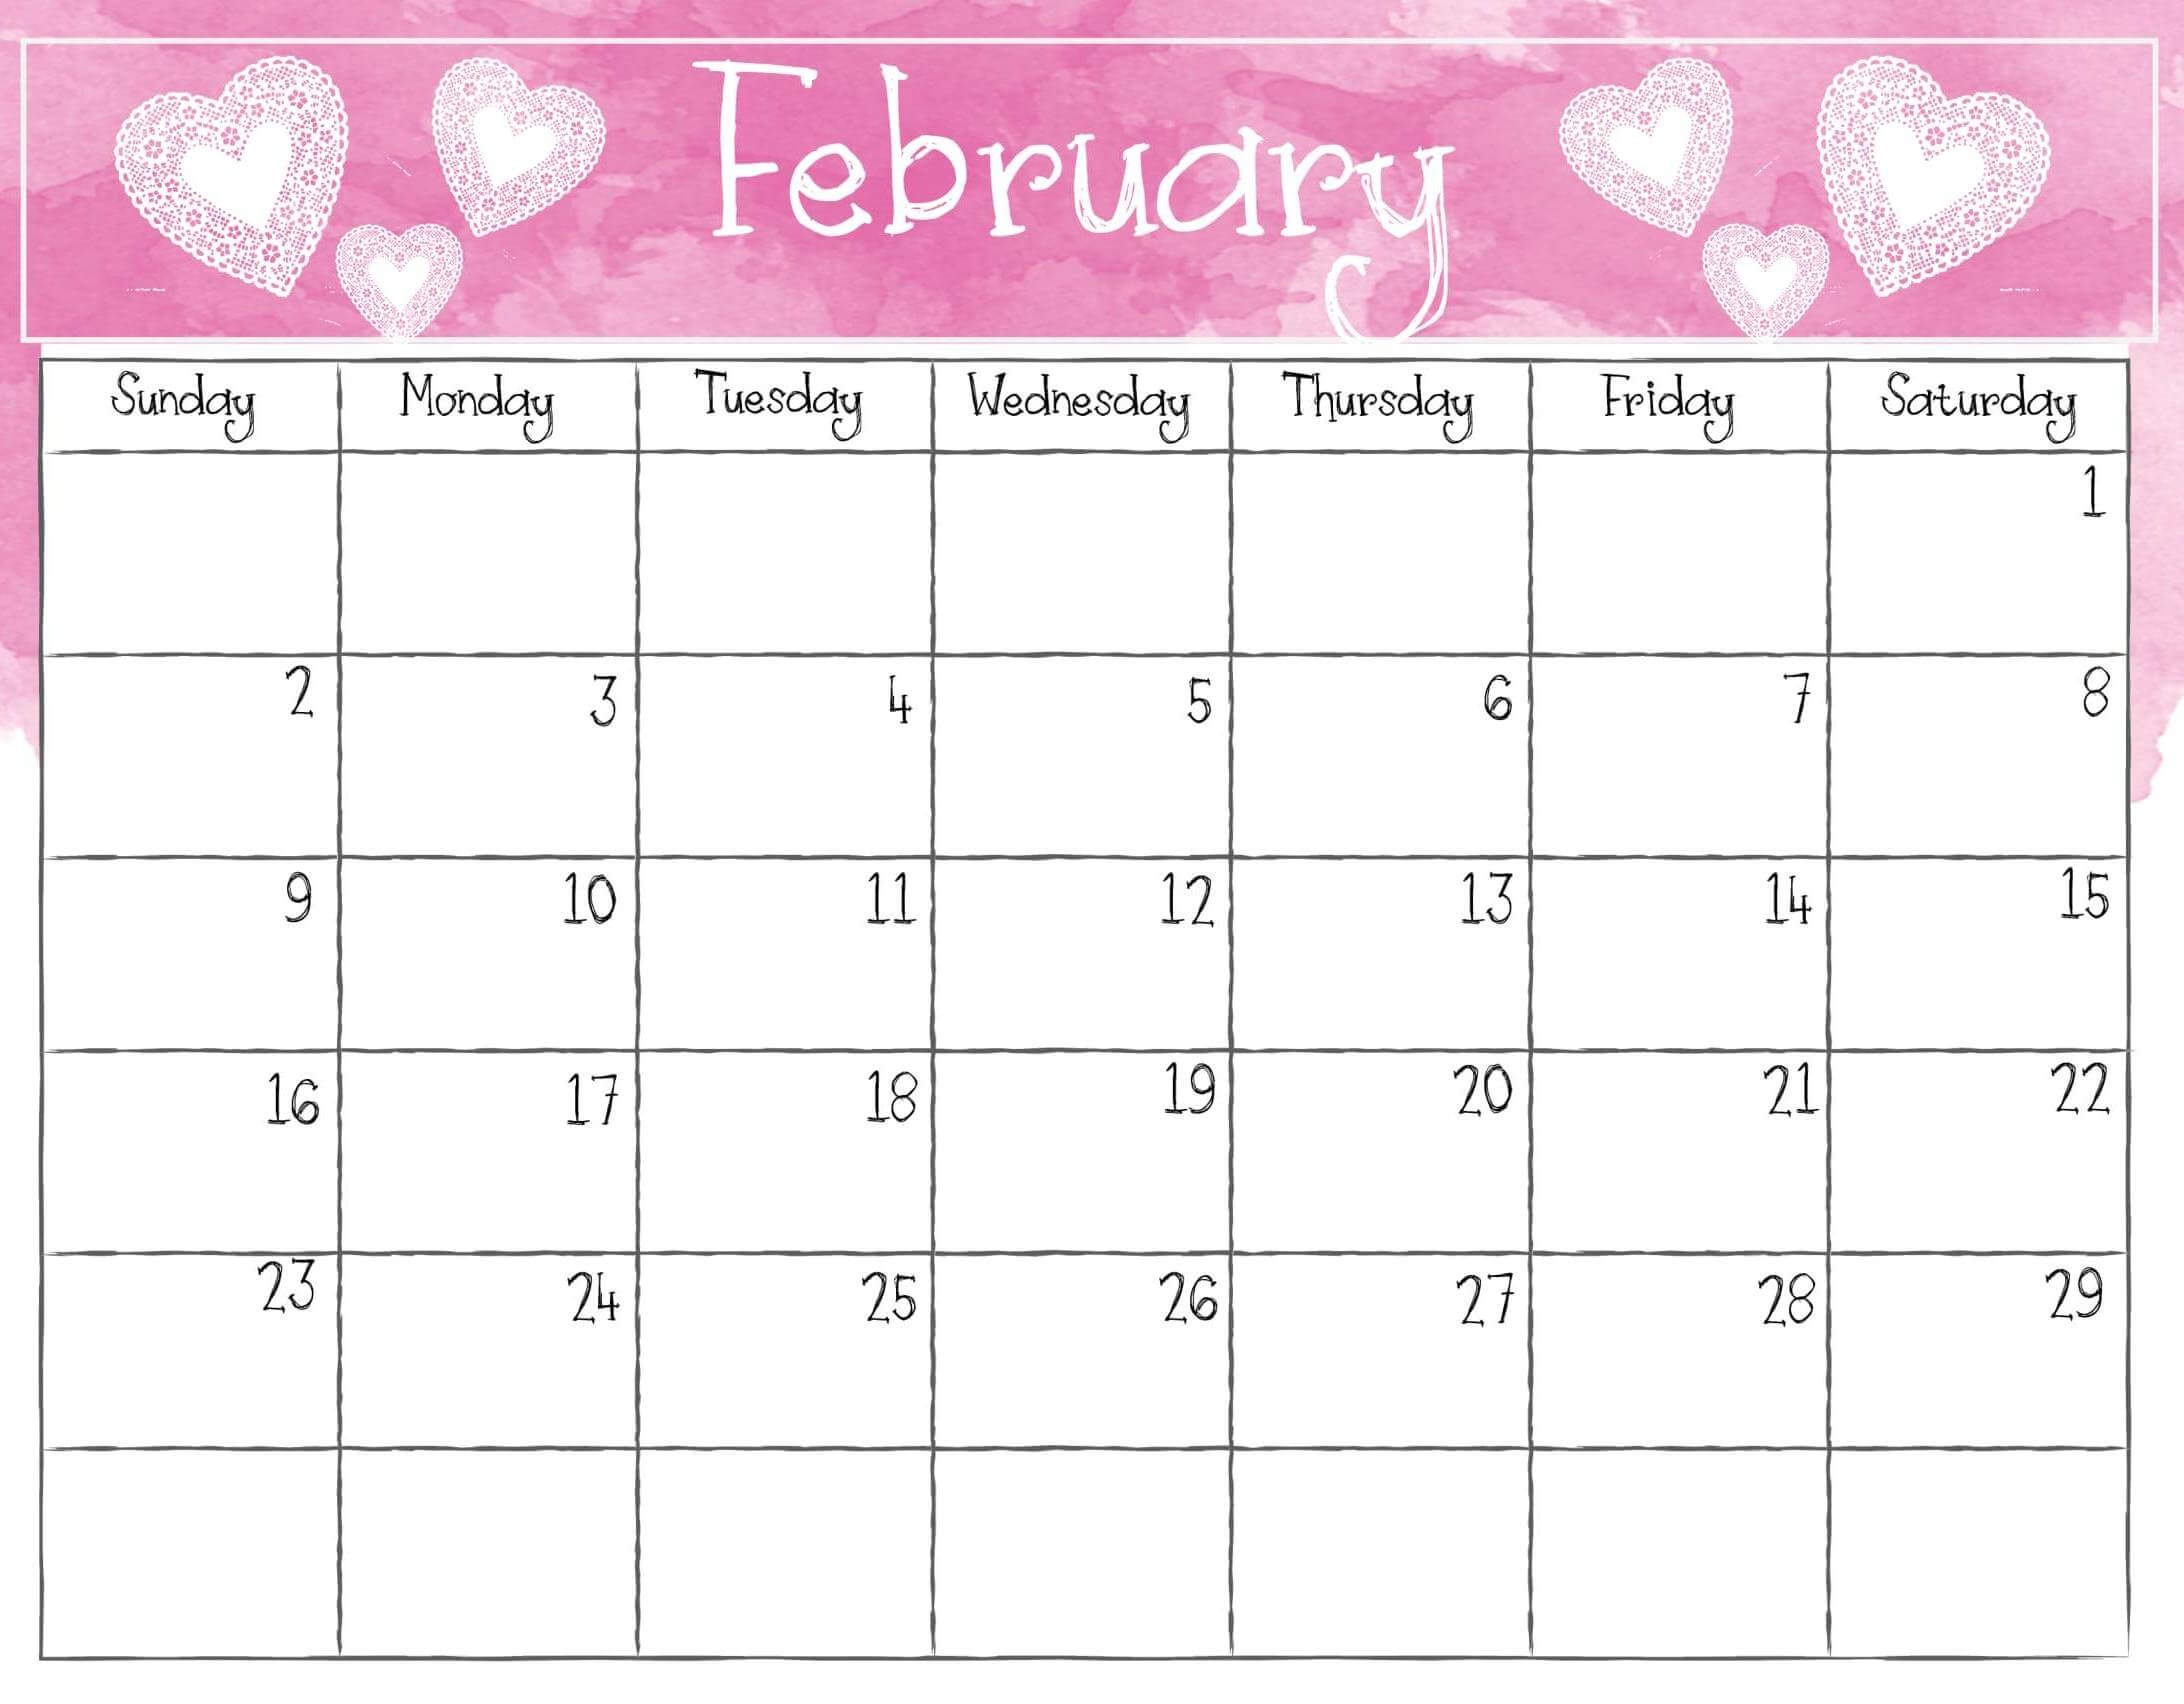 Printable Calendar February Practical, versatile and customizable